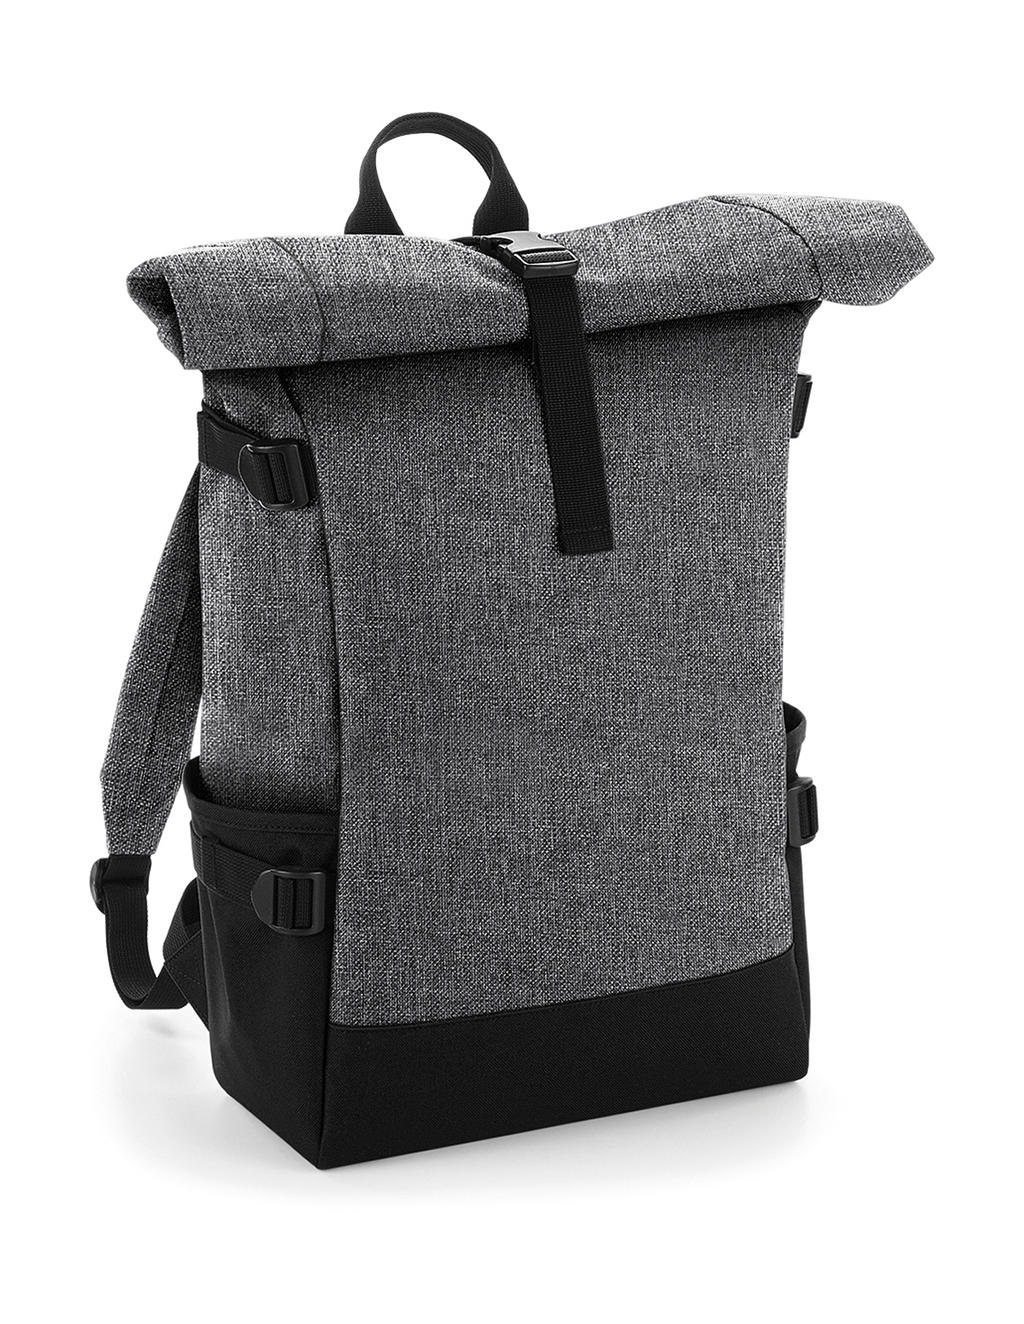  Block Roll-Top Backpack in Farbe Grey Marl/Black